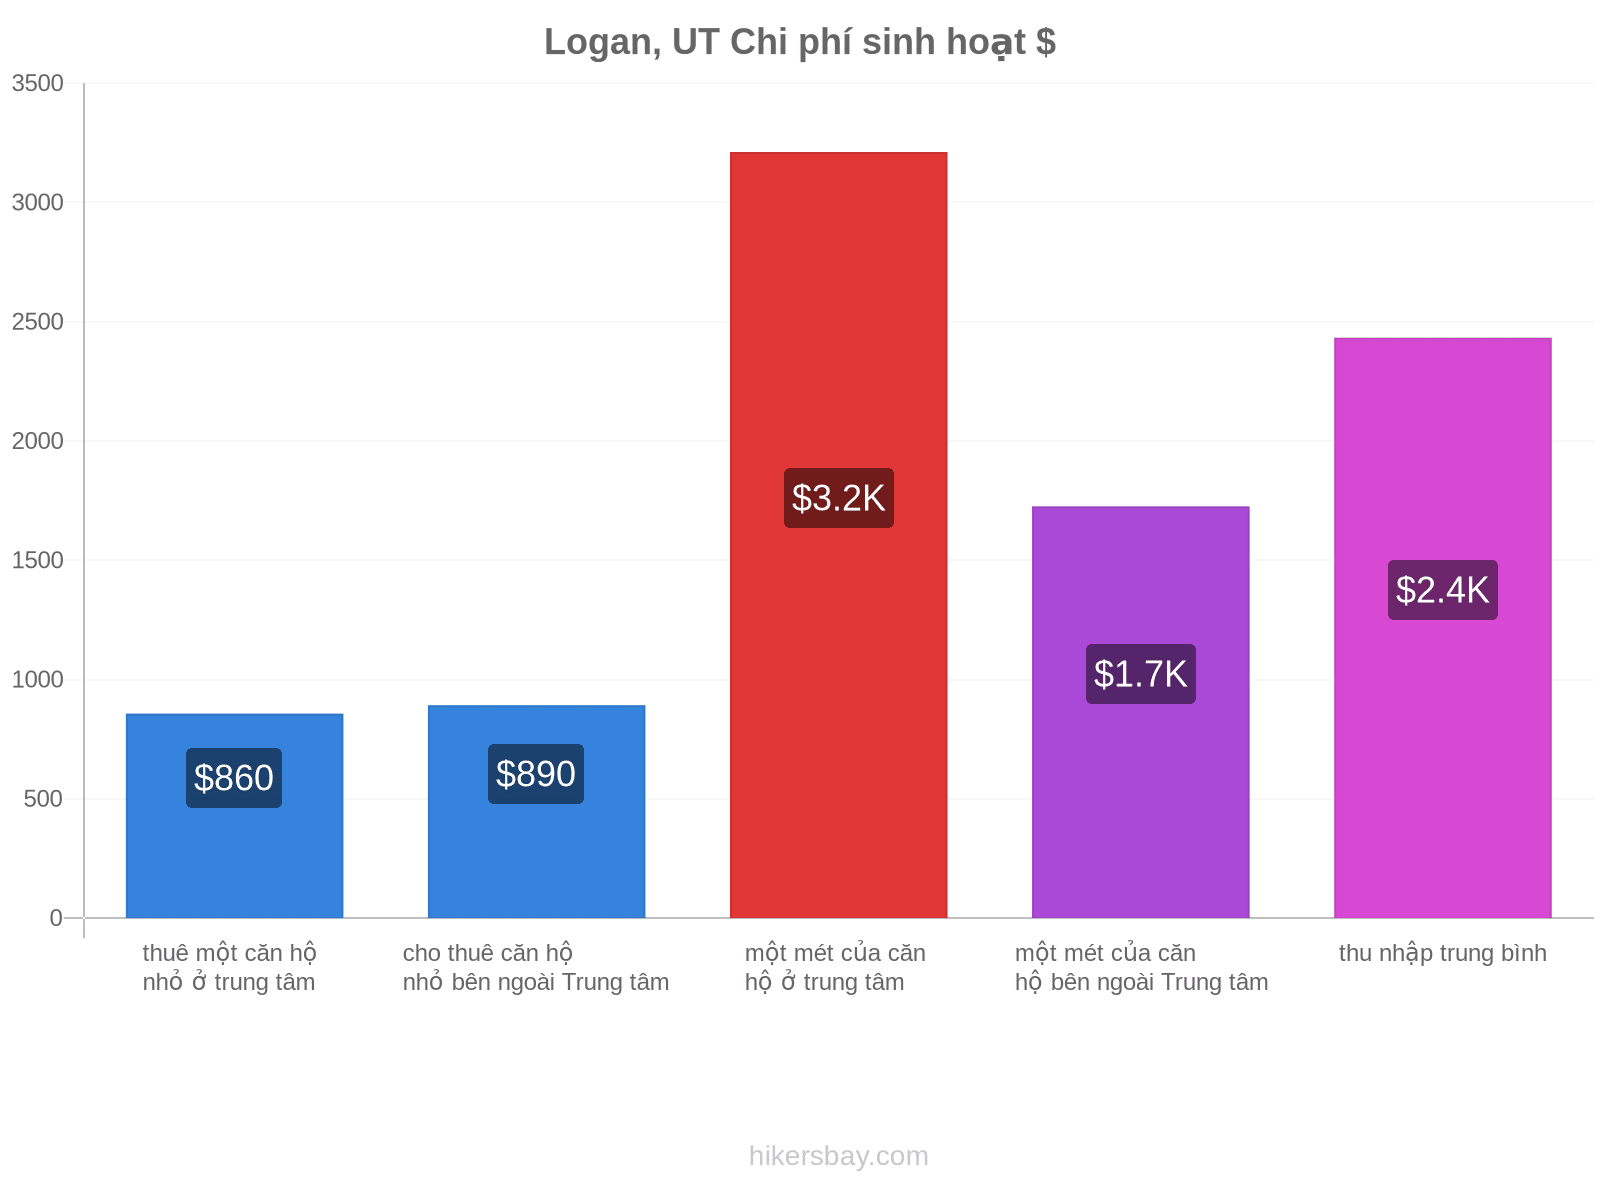 Logan, UT chi phí sinh hoạt hikersbay.com